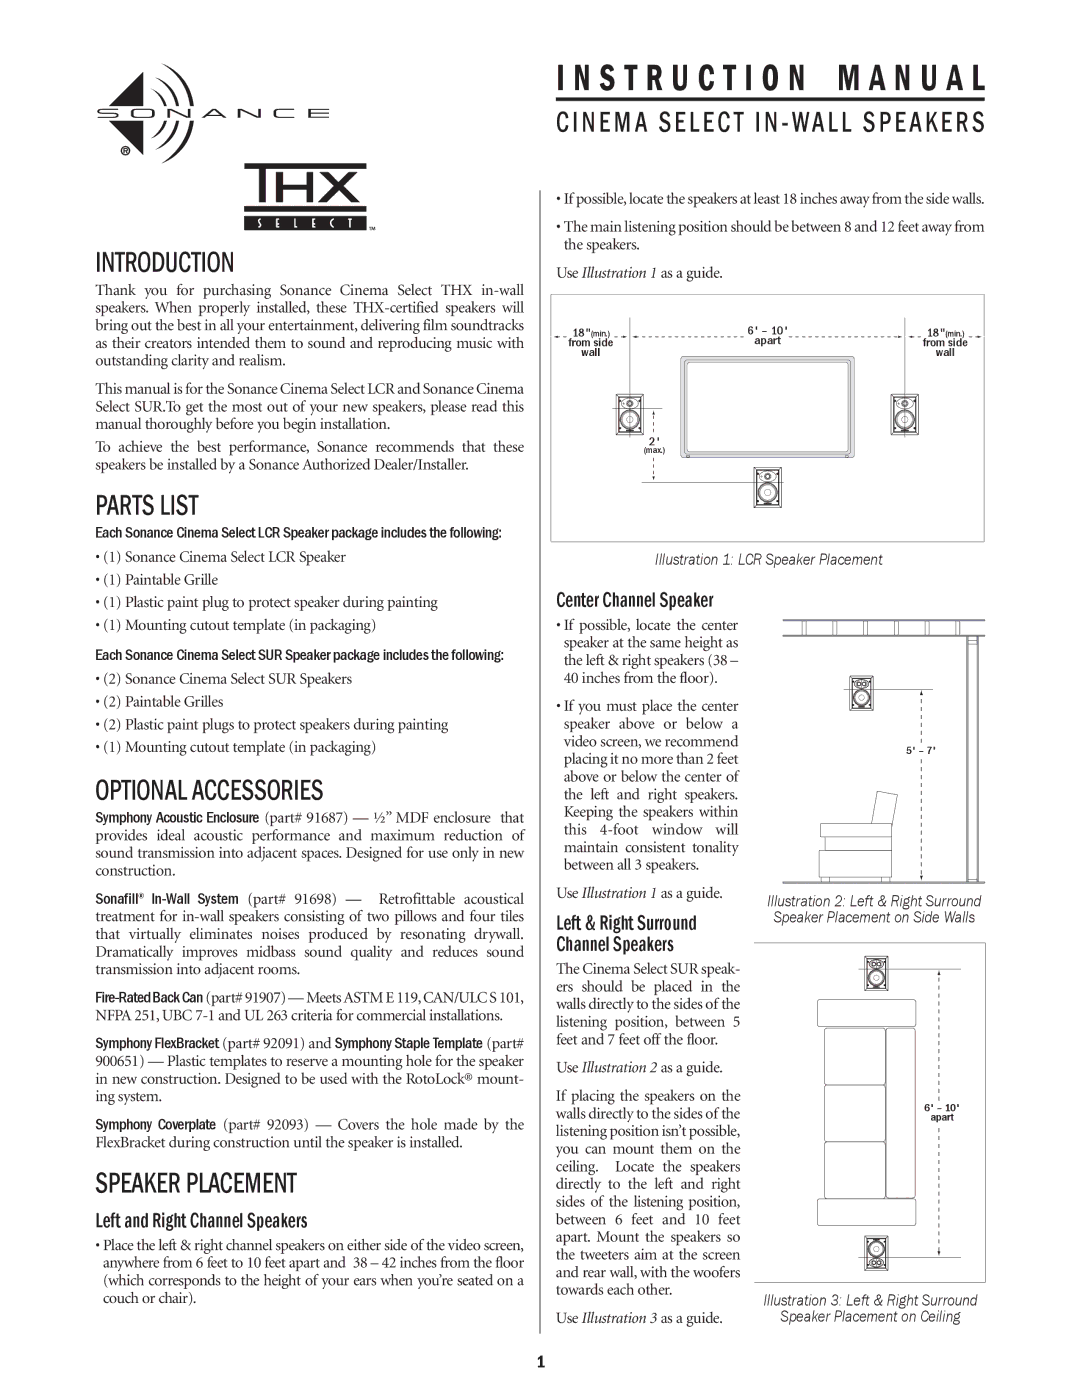 Sonance THX instruction manual Introduction, Parts List, Optional Accessories, Speaker Placement 